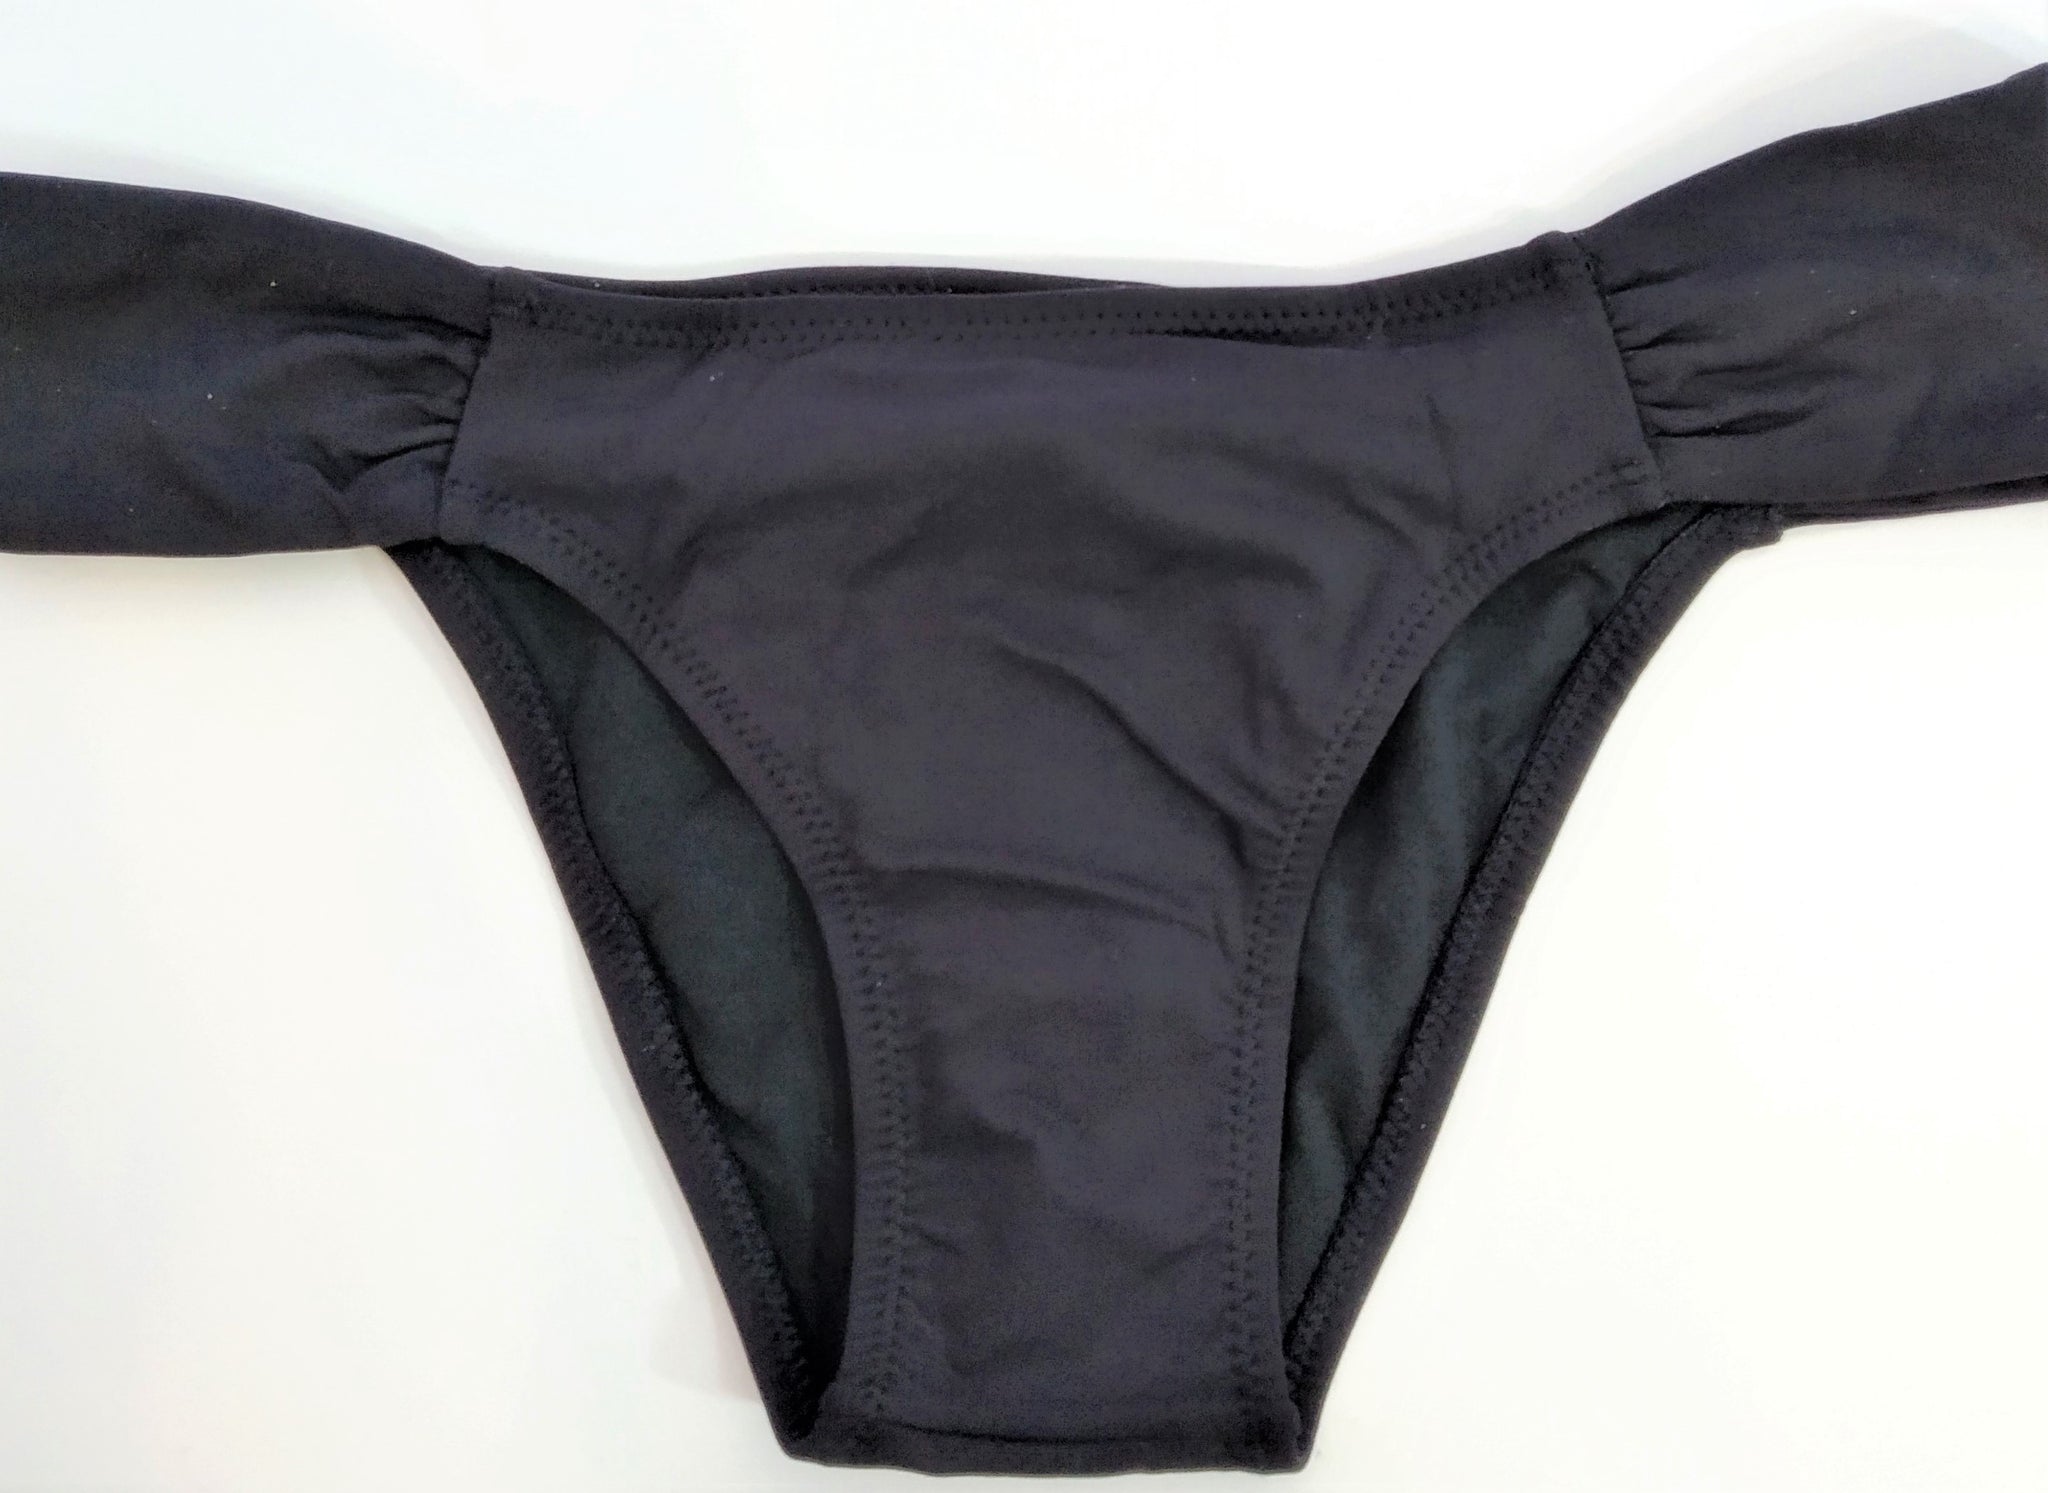 black swimsuit panties lay flat, part of a strapless black bikini set. at bikinn.com bikini collection